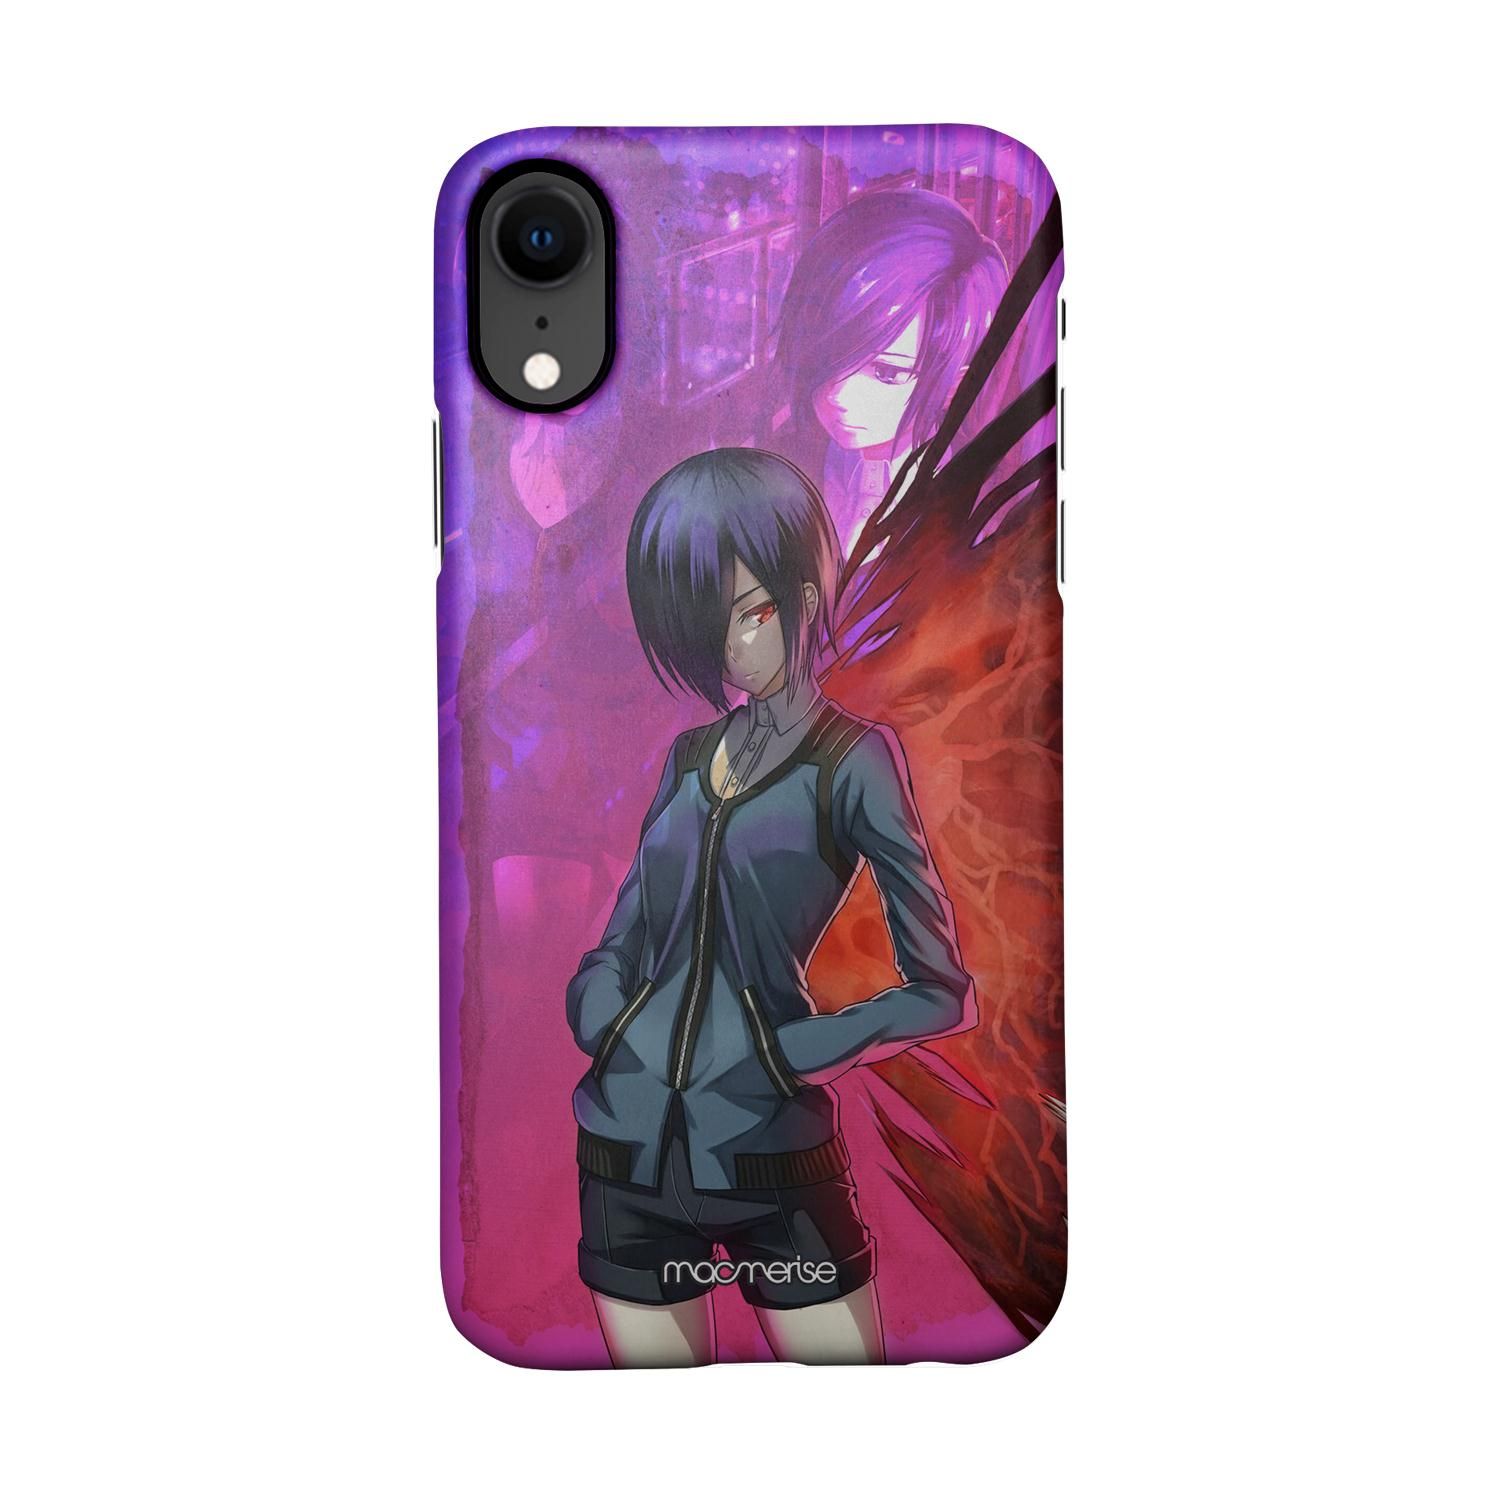 Buy Touka Kirishima - Sleek Phone Case for iPhone XR Online